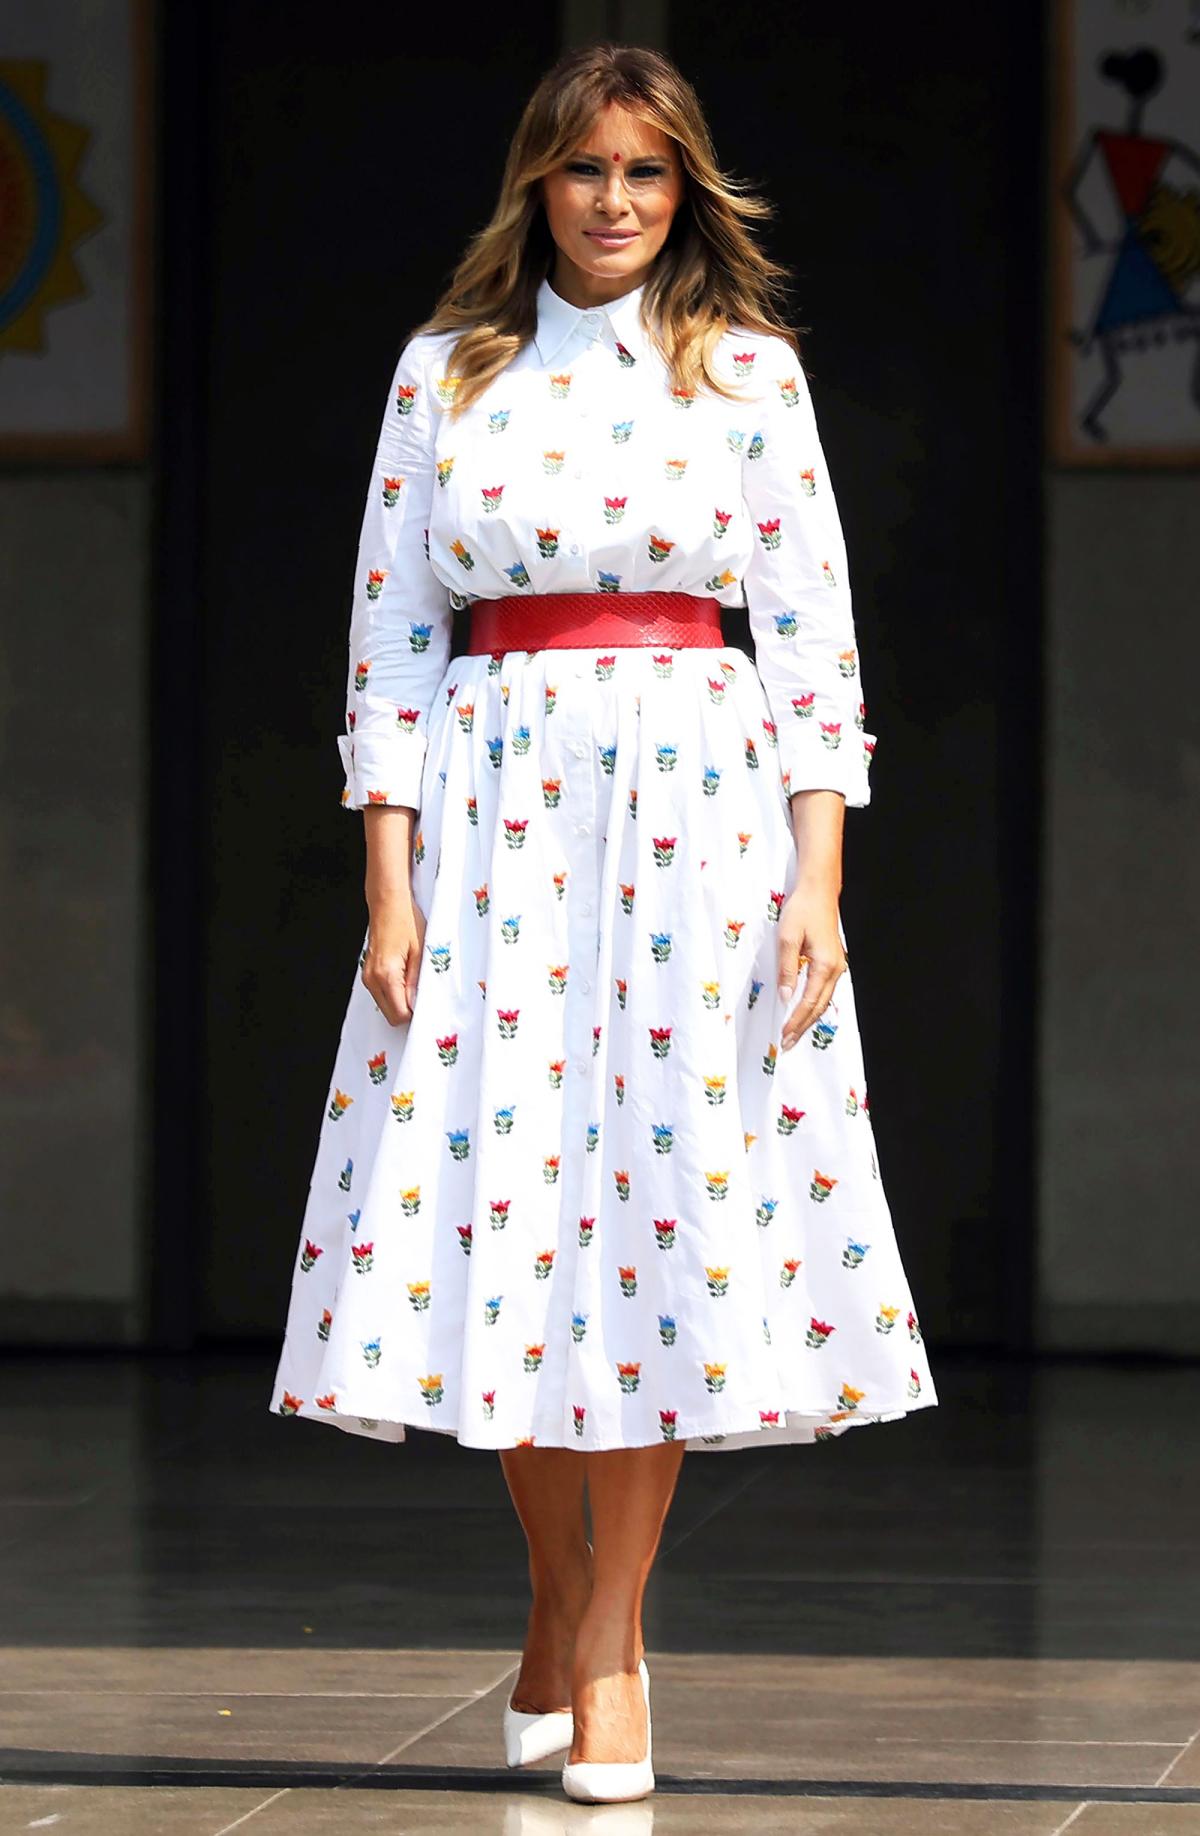 Ivanka Trump models pink mini dress to attend Louis Vuitton fashion show